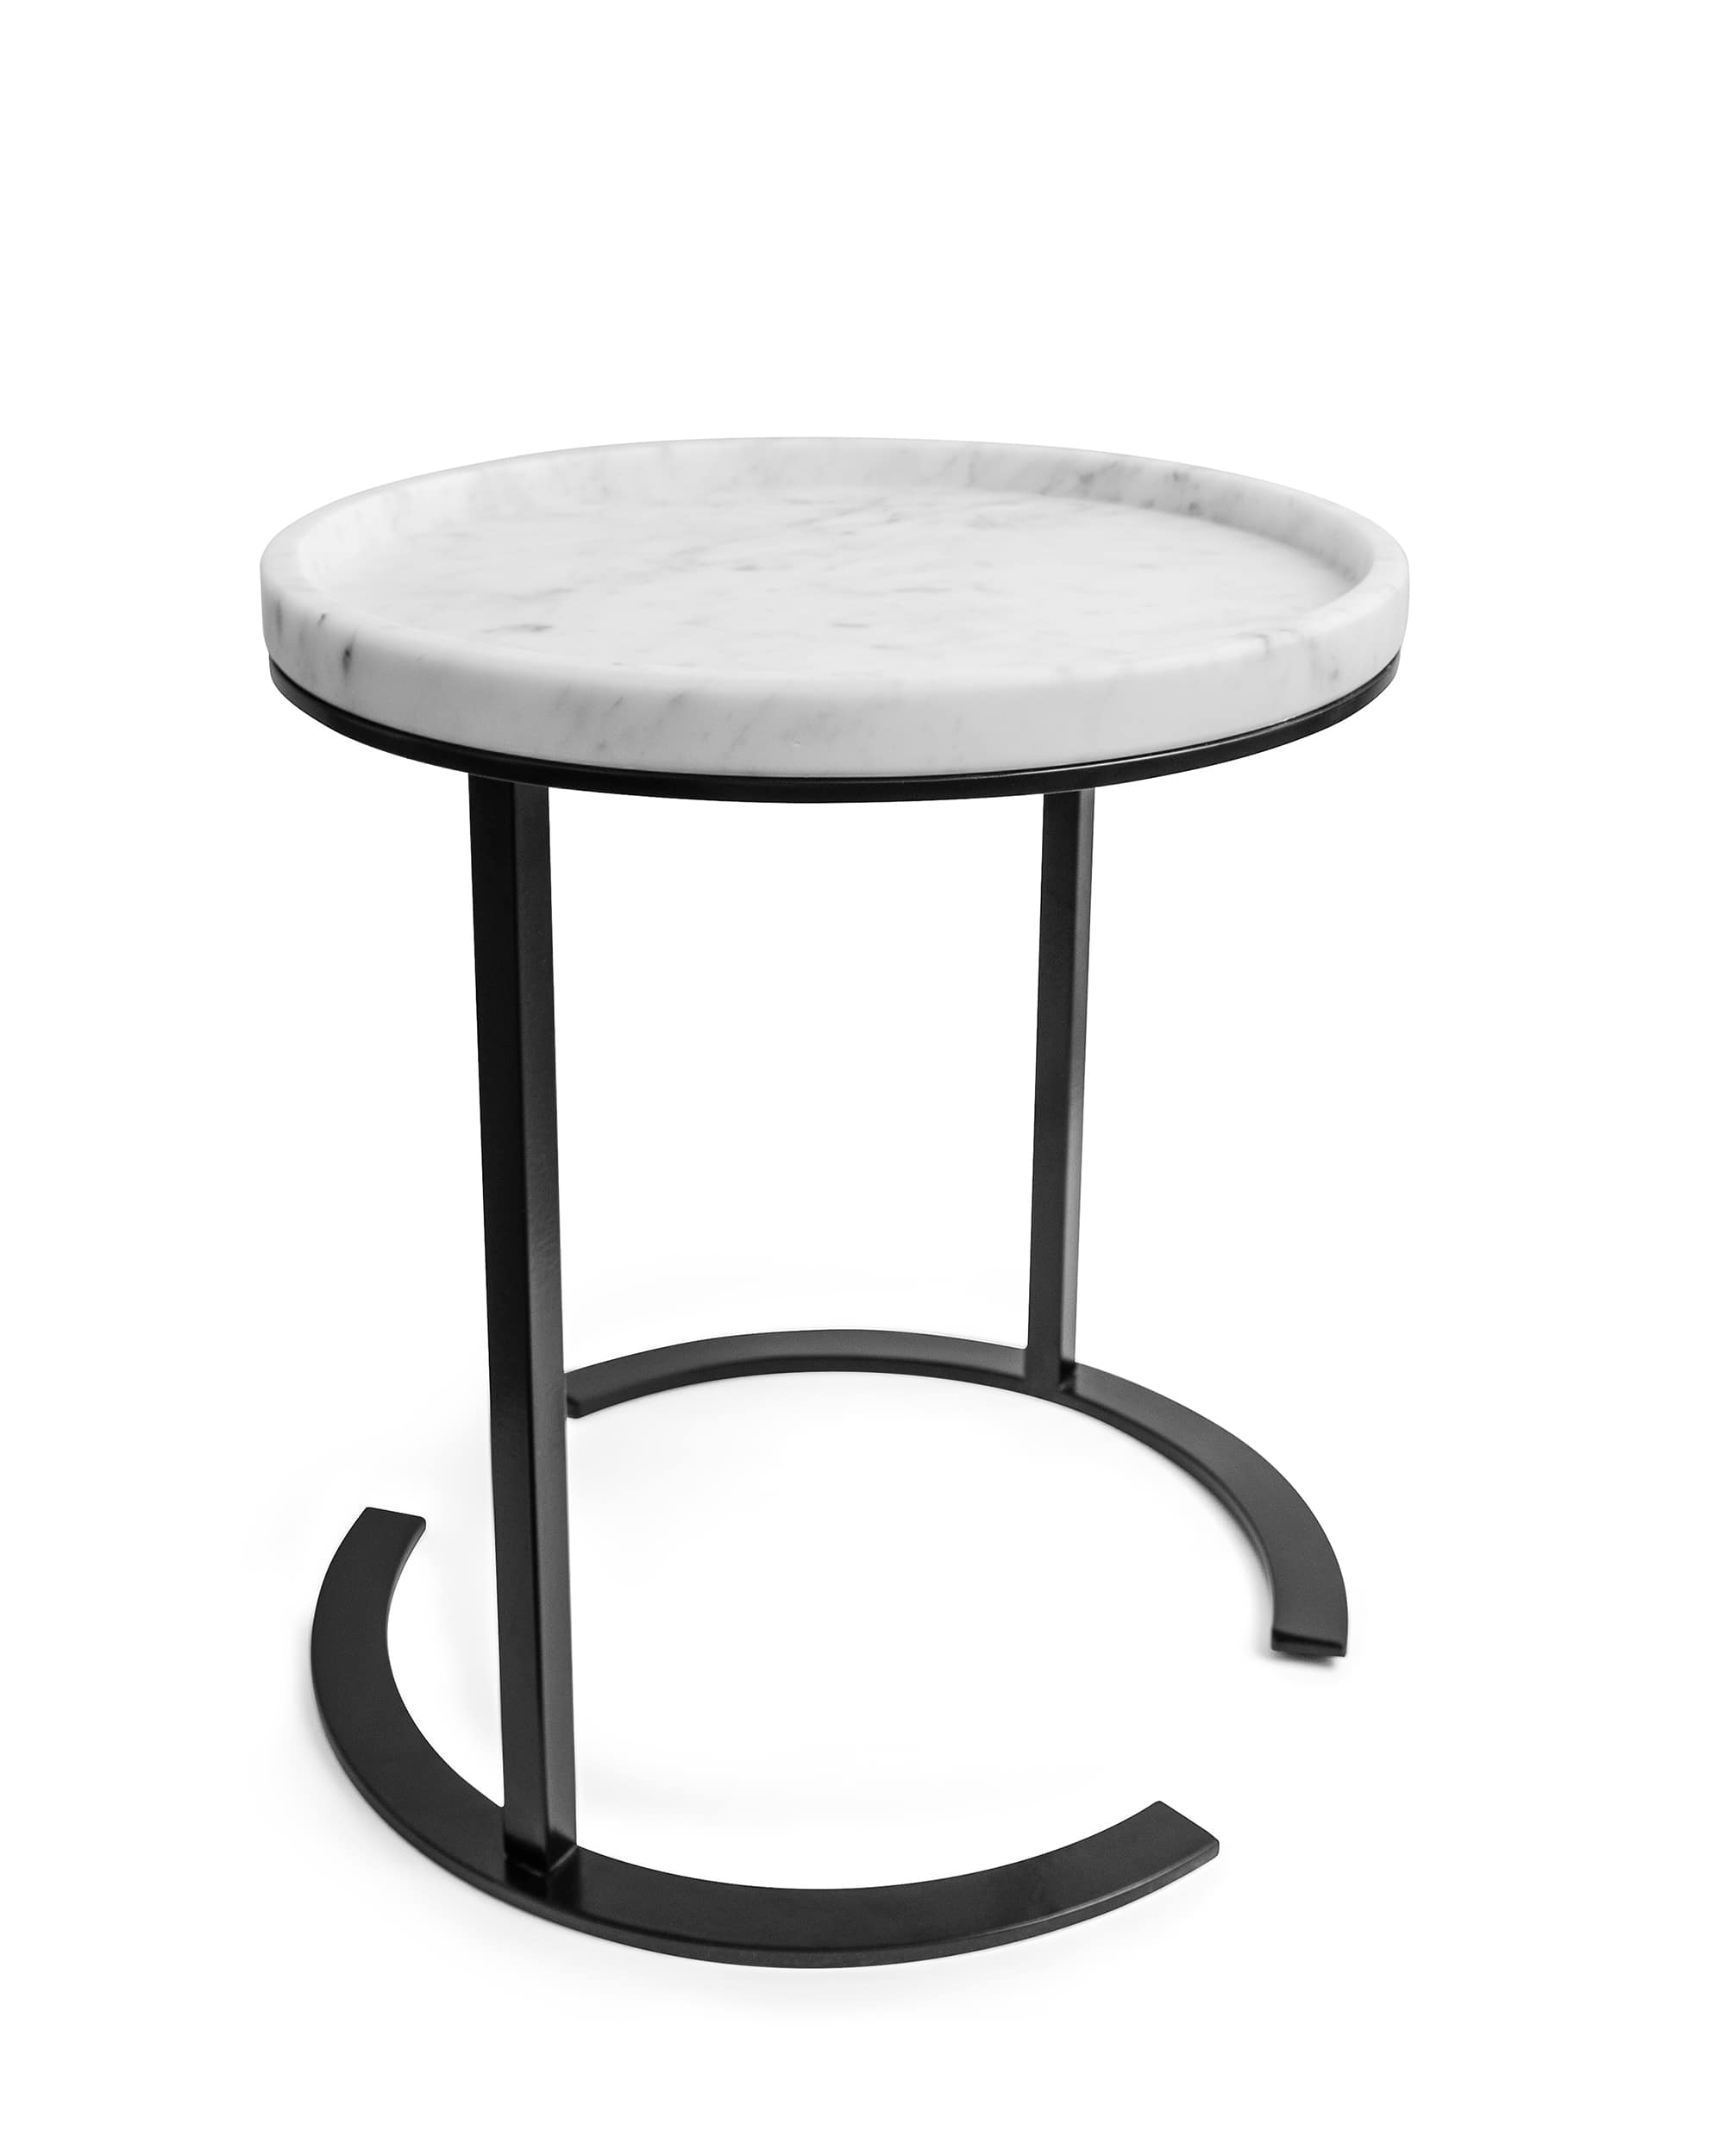 Tea table - Round coffee table in white Carrara marble